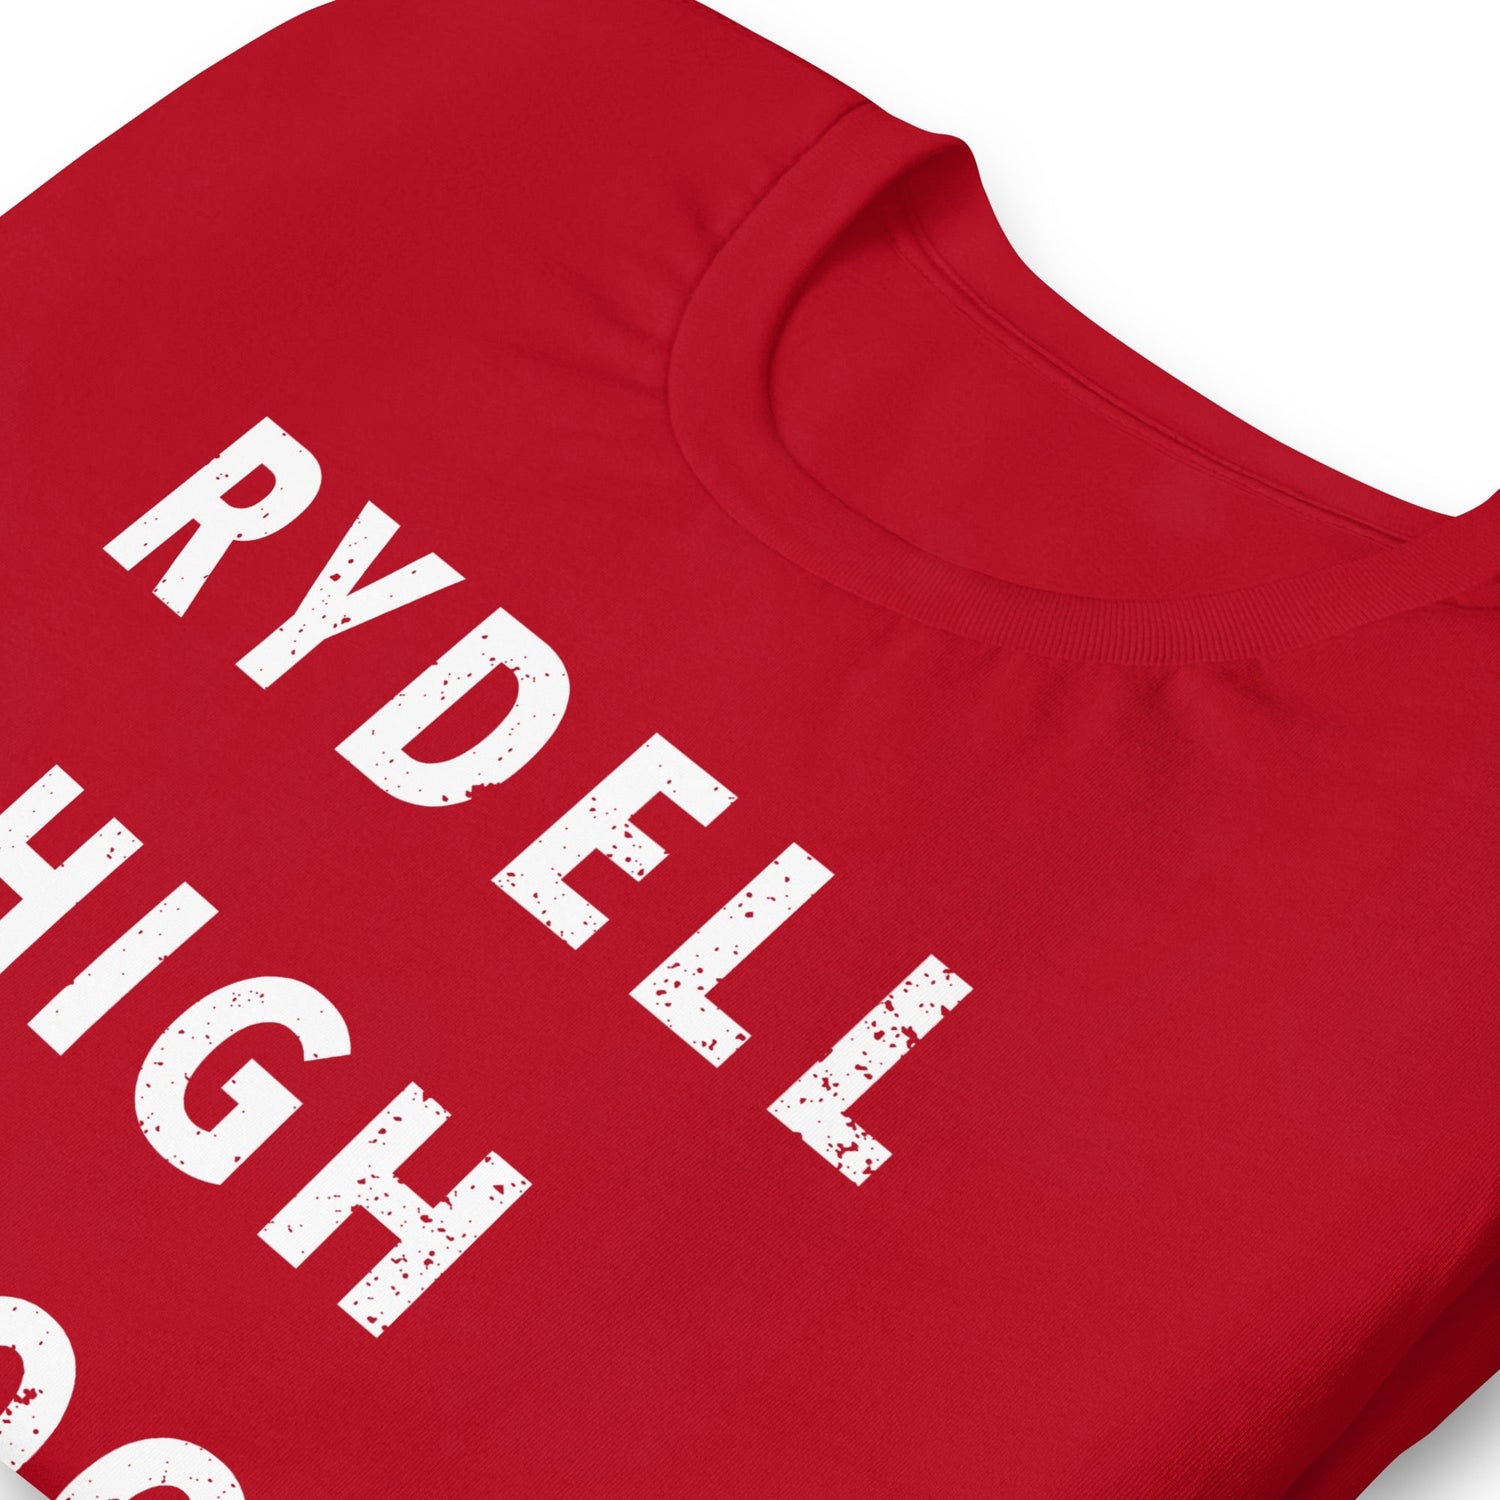 Grease Rydell High School Adult Short Sleeve T - Shirt - Paramount Shop